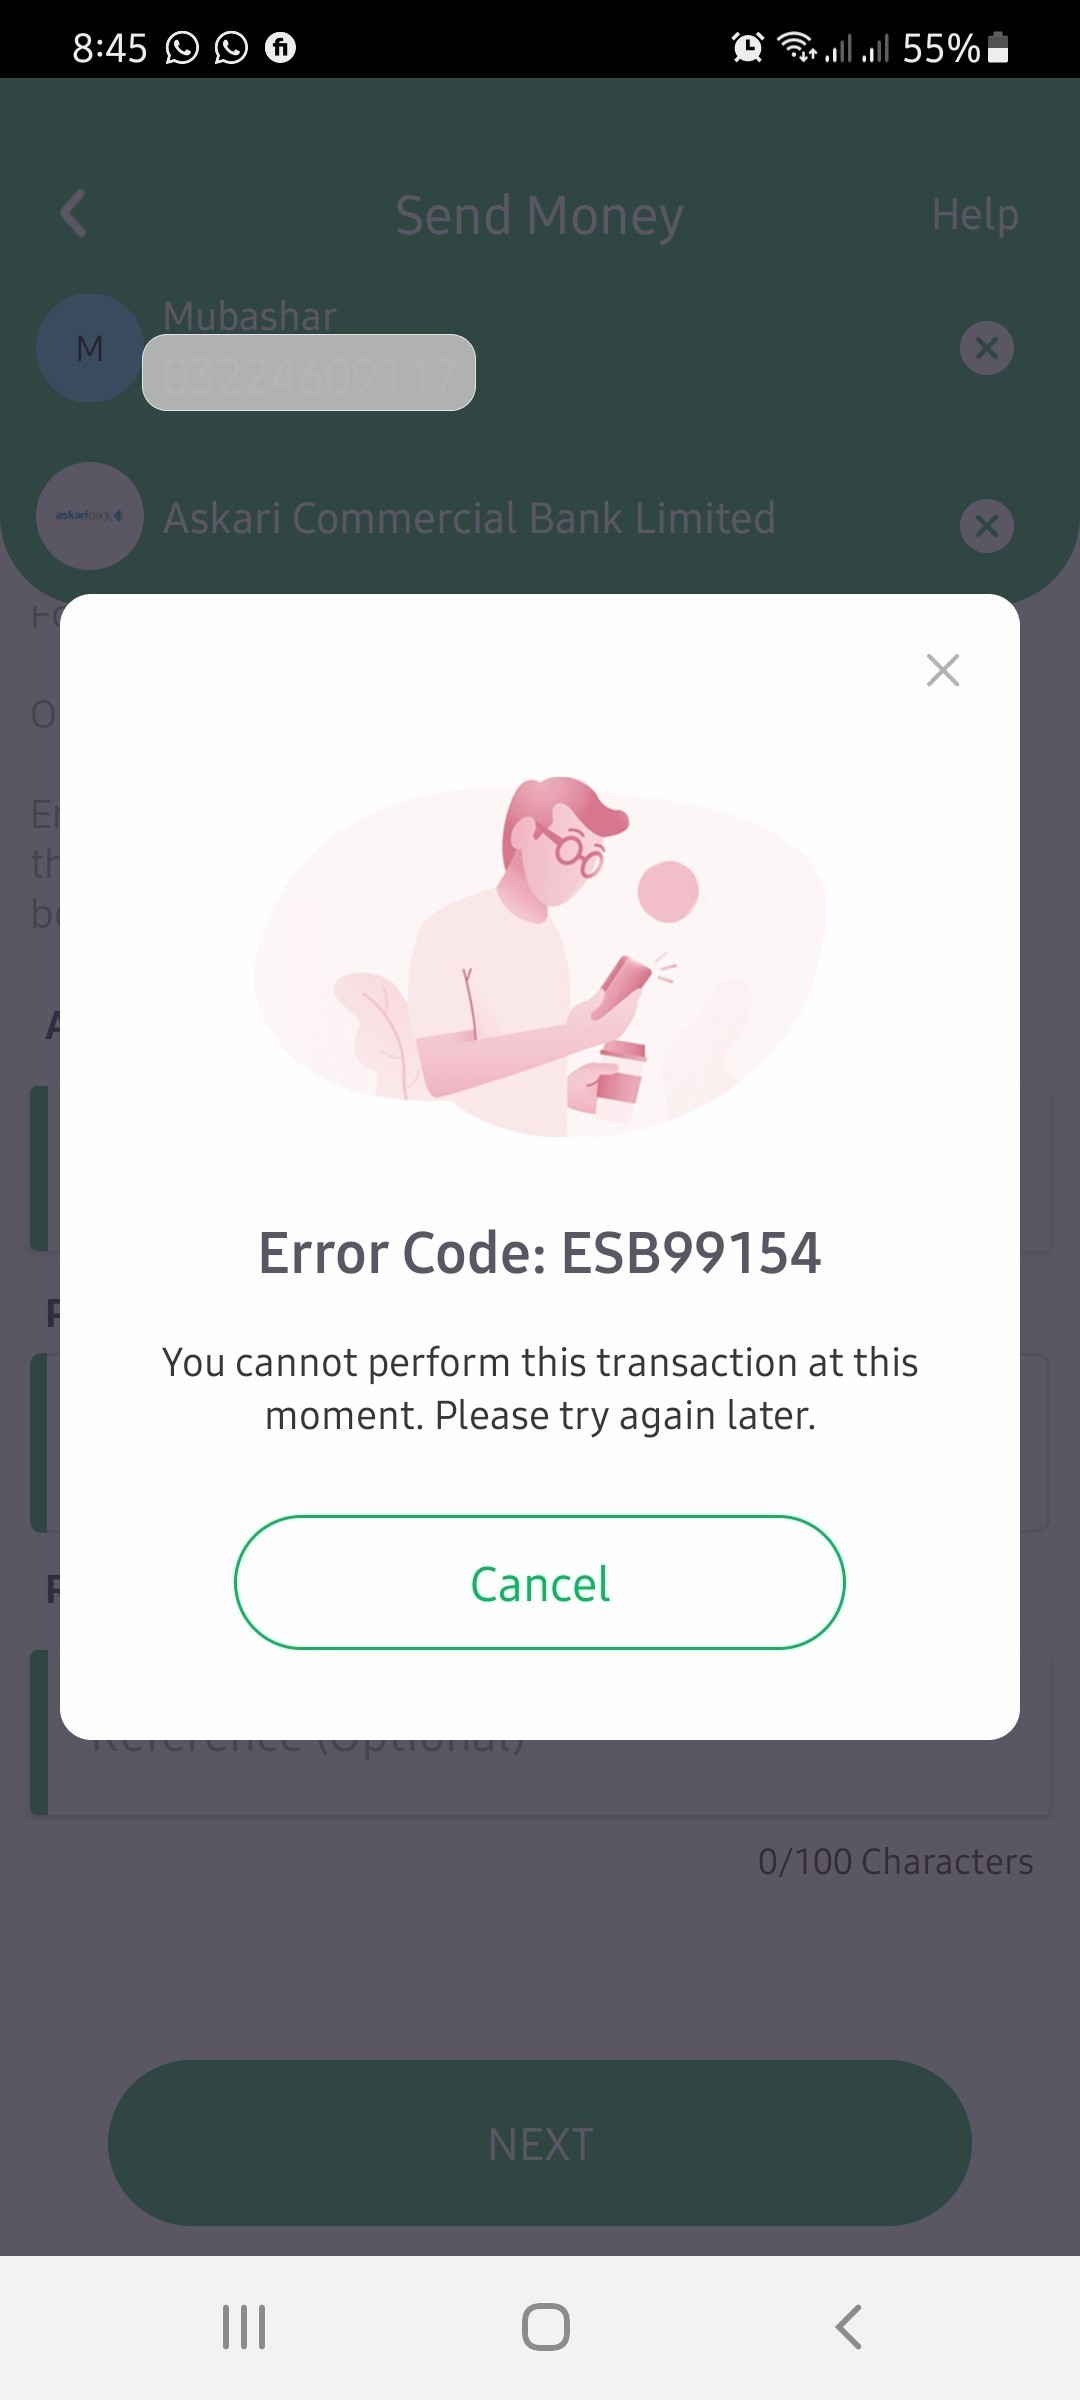 Easypaisa error code ESB99154